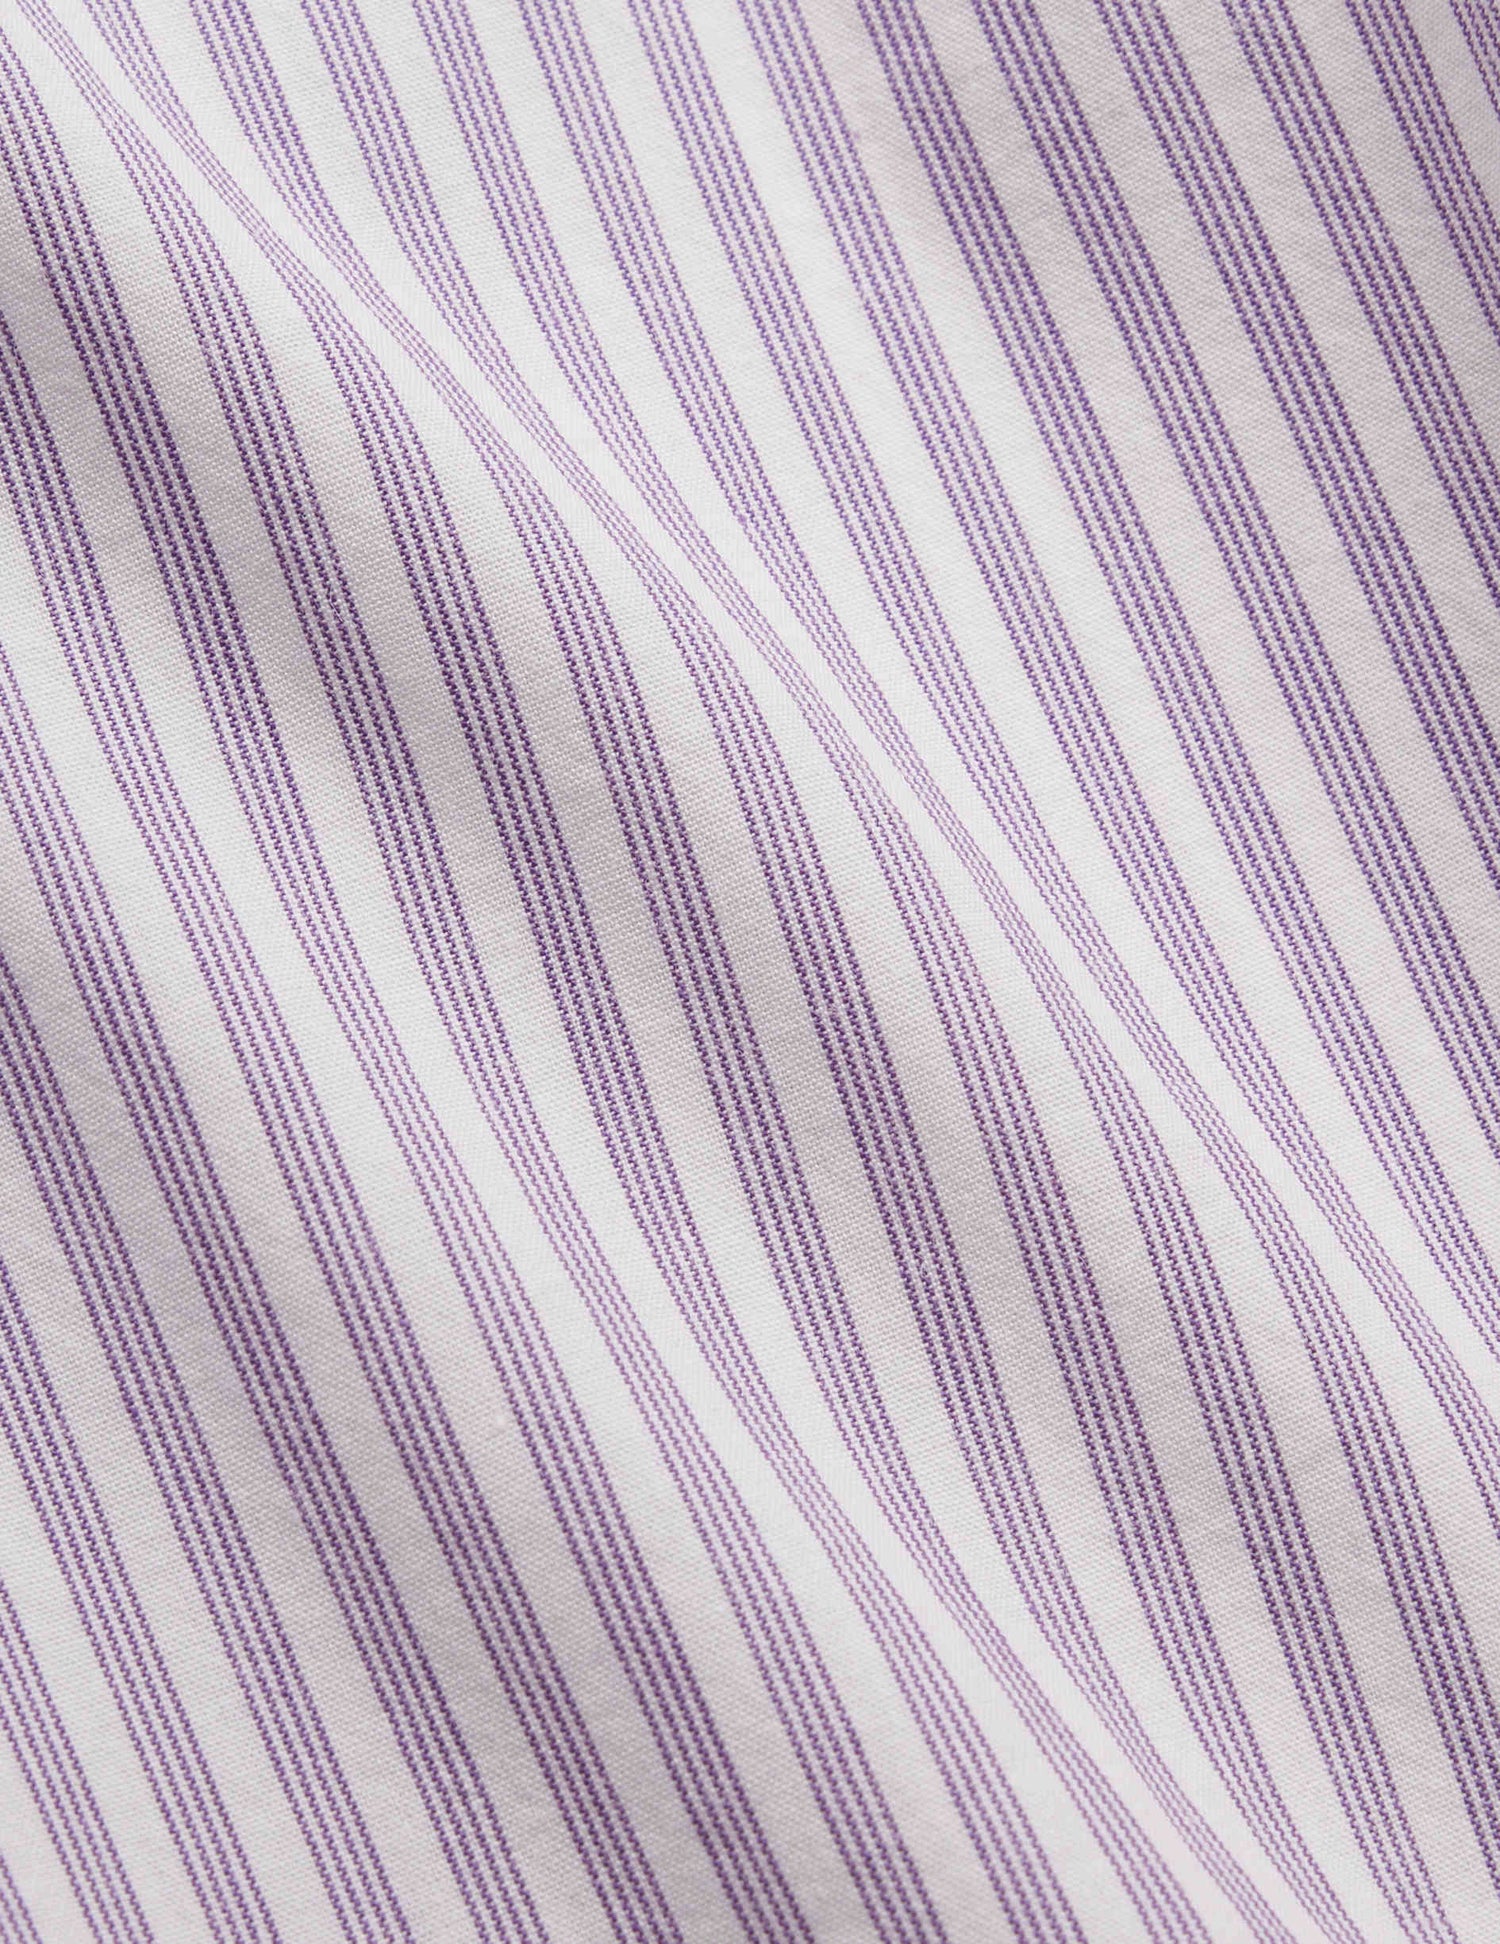 Striped purple Carl shirt - Poplin - Open straight Collar#5